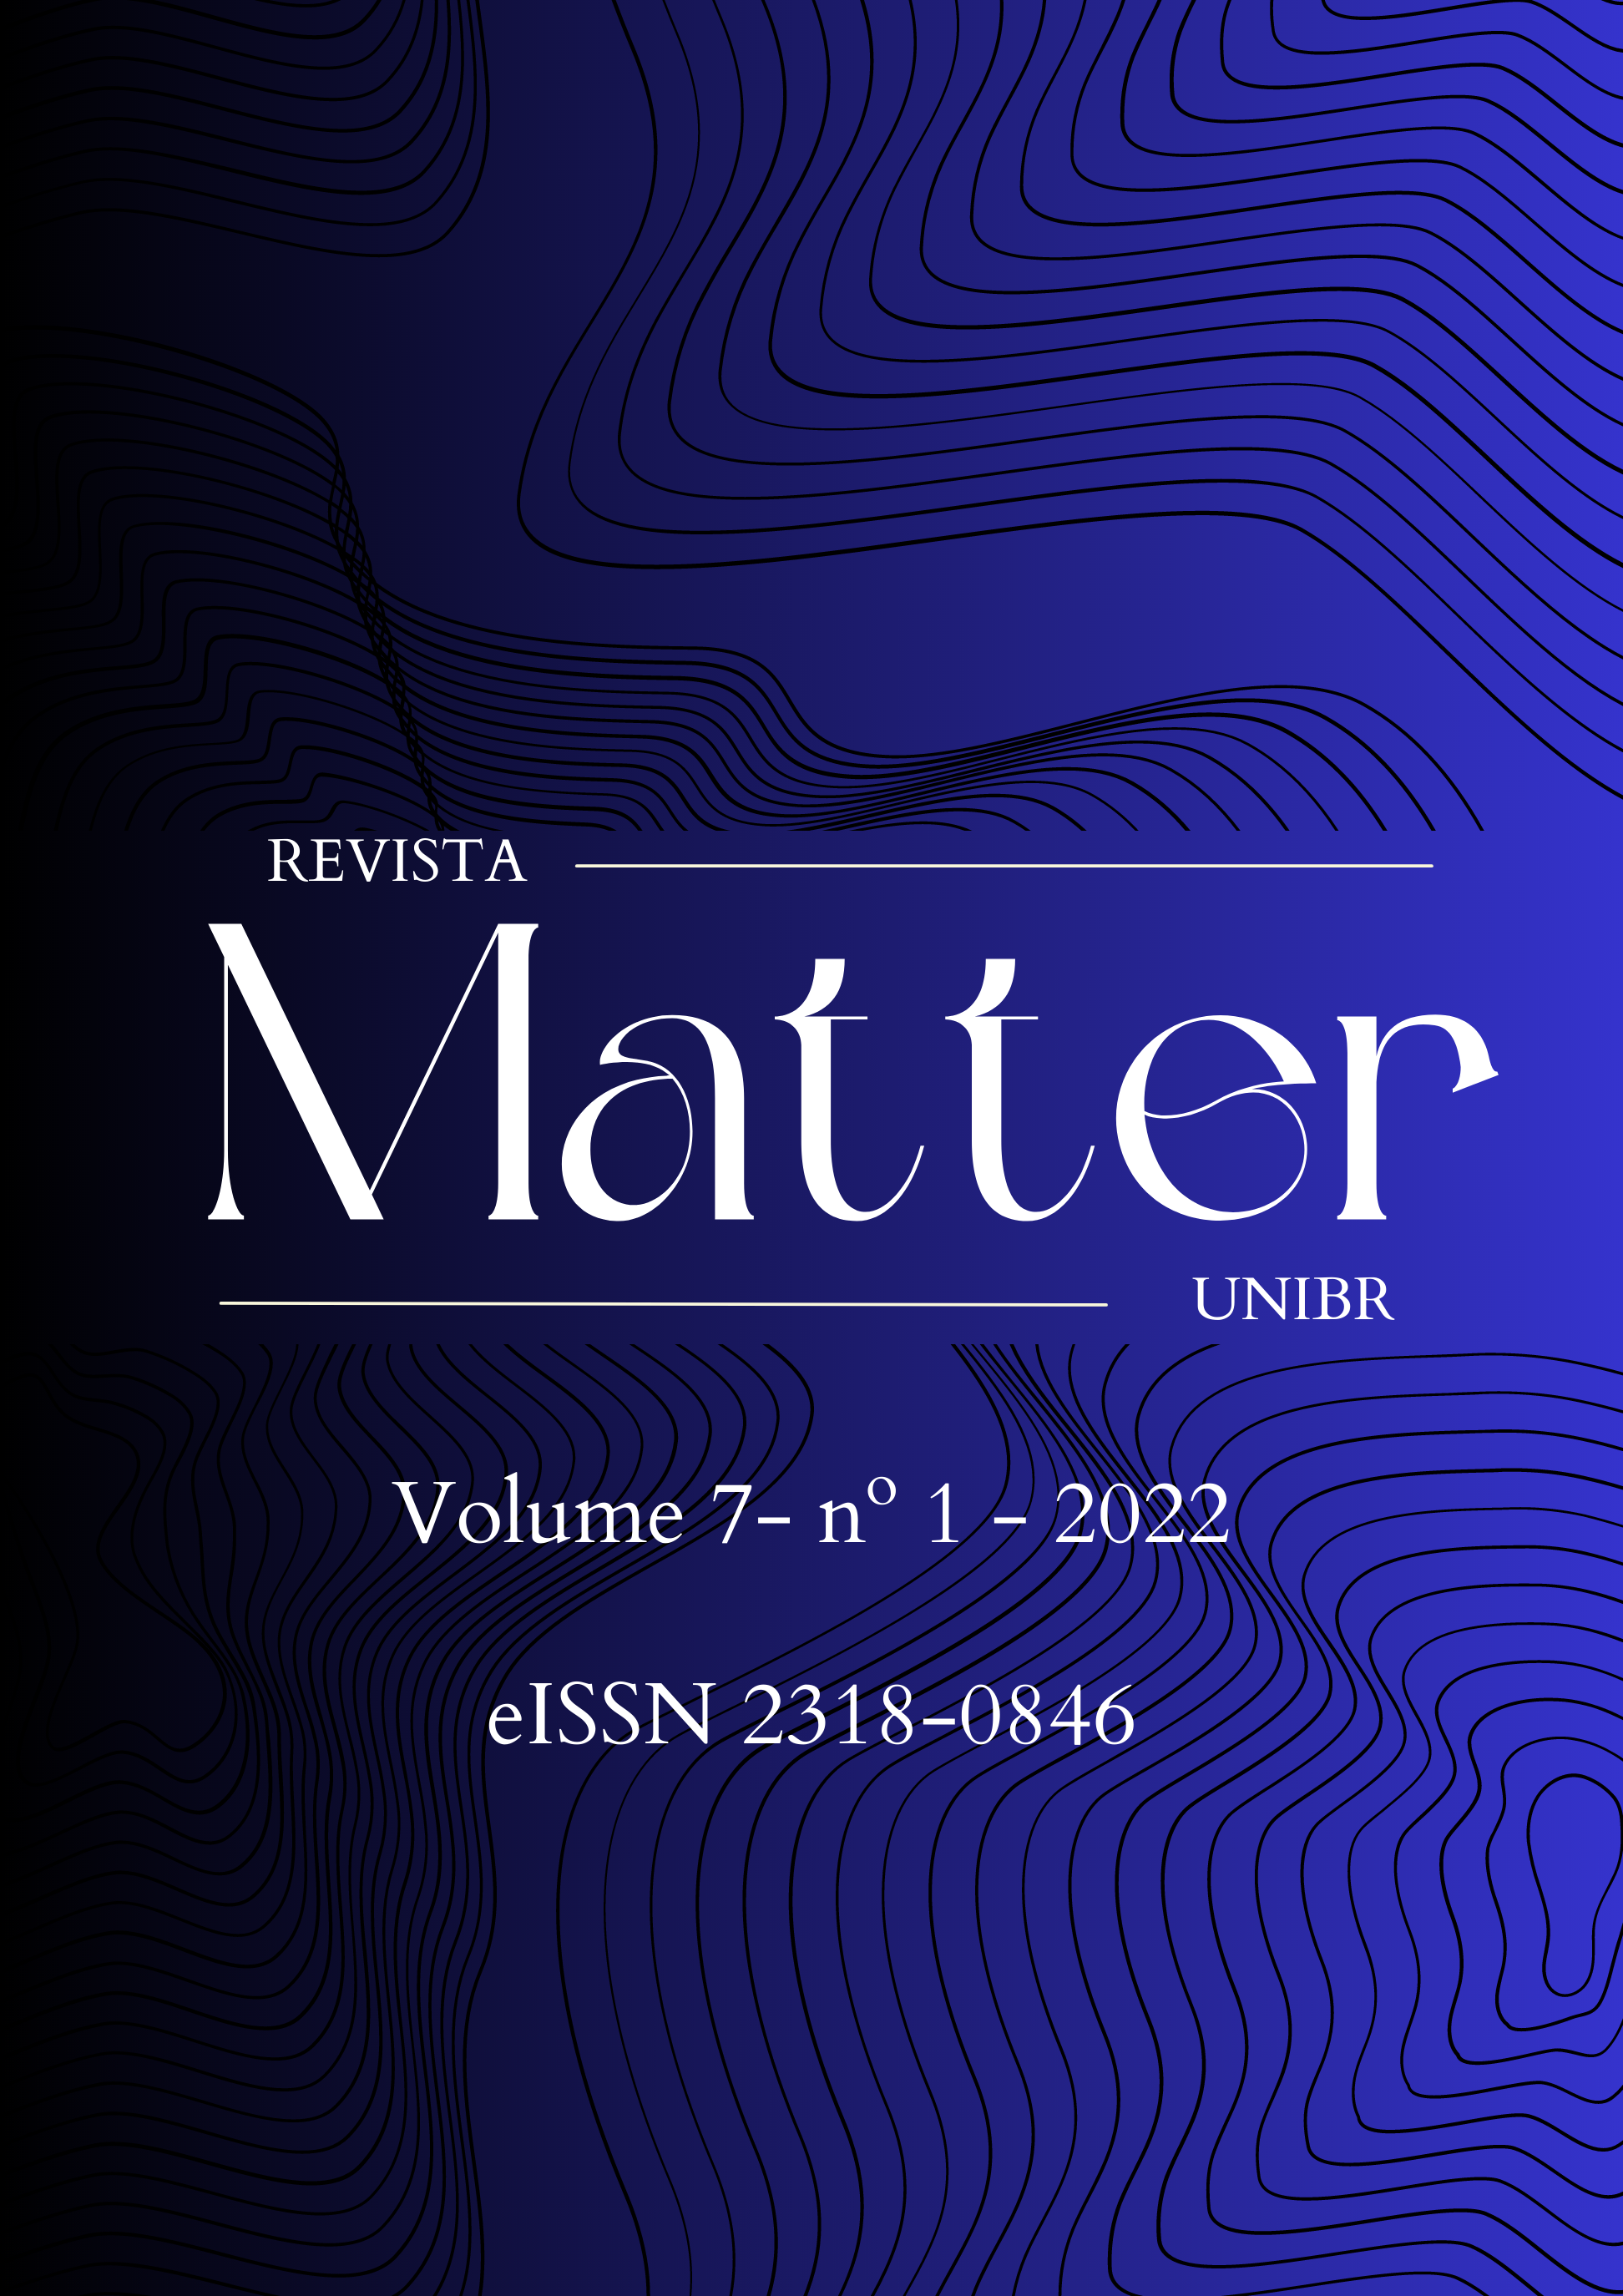 Capa azul com escrito: Revista Matter UNIBR Volume 7 - nº 1 - Dezembro/2022